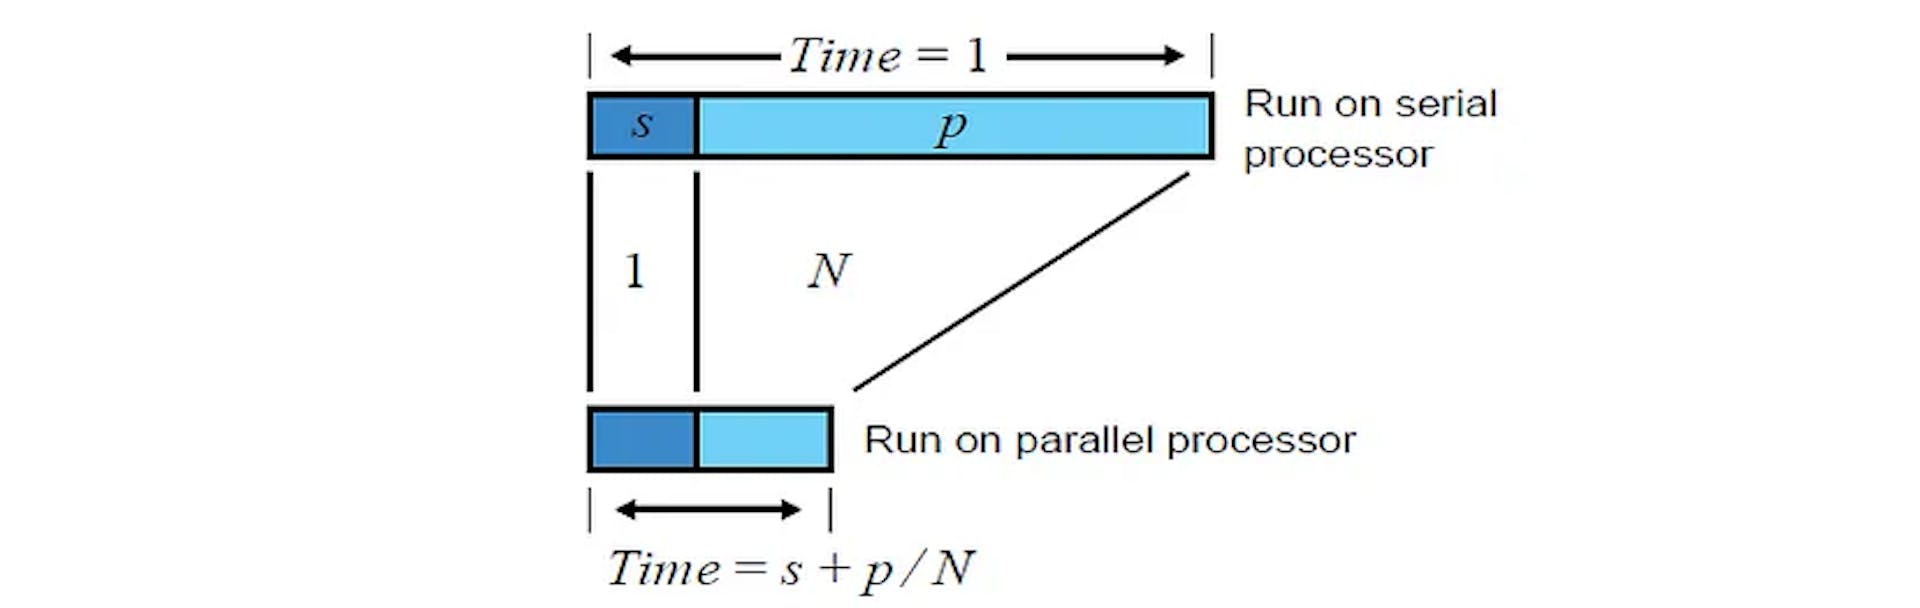 Fixed-Size Model (Amdahl’s Law) [2]